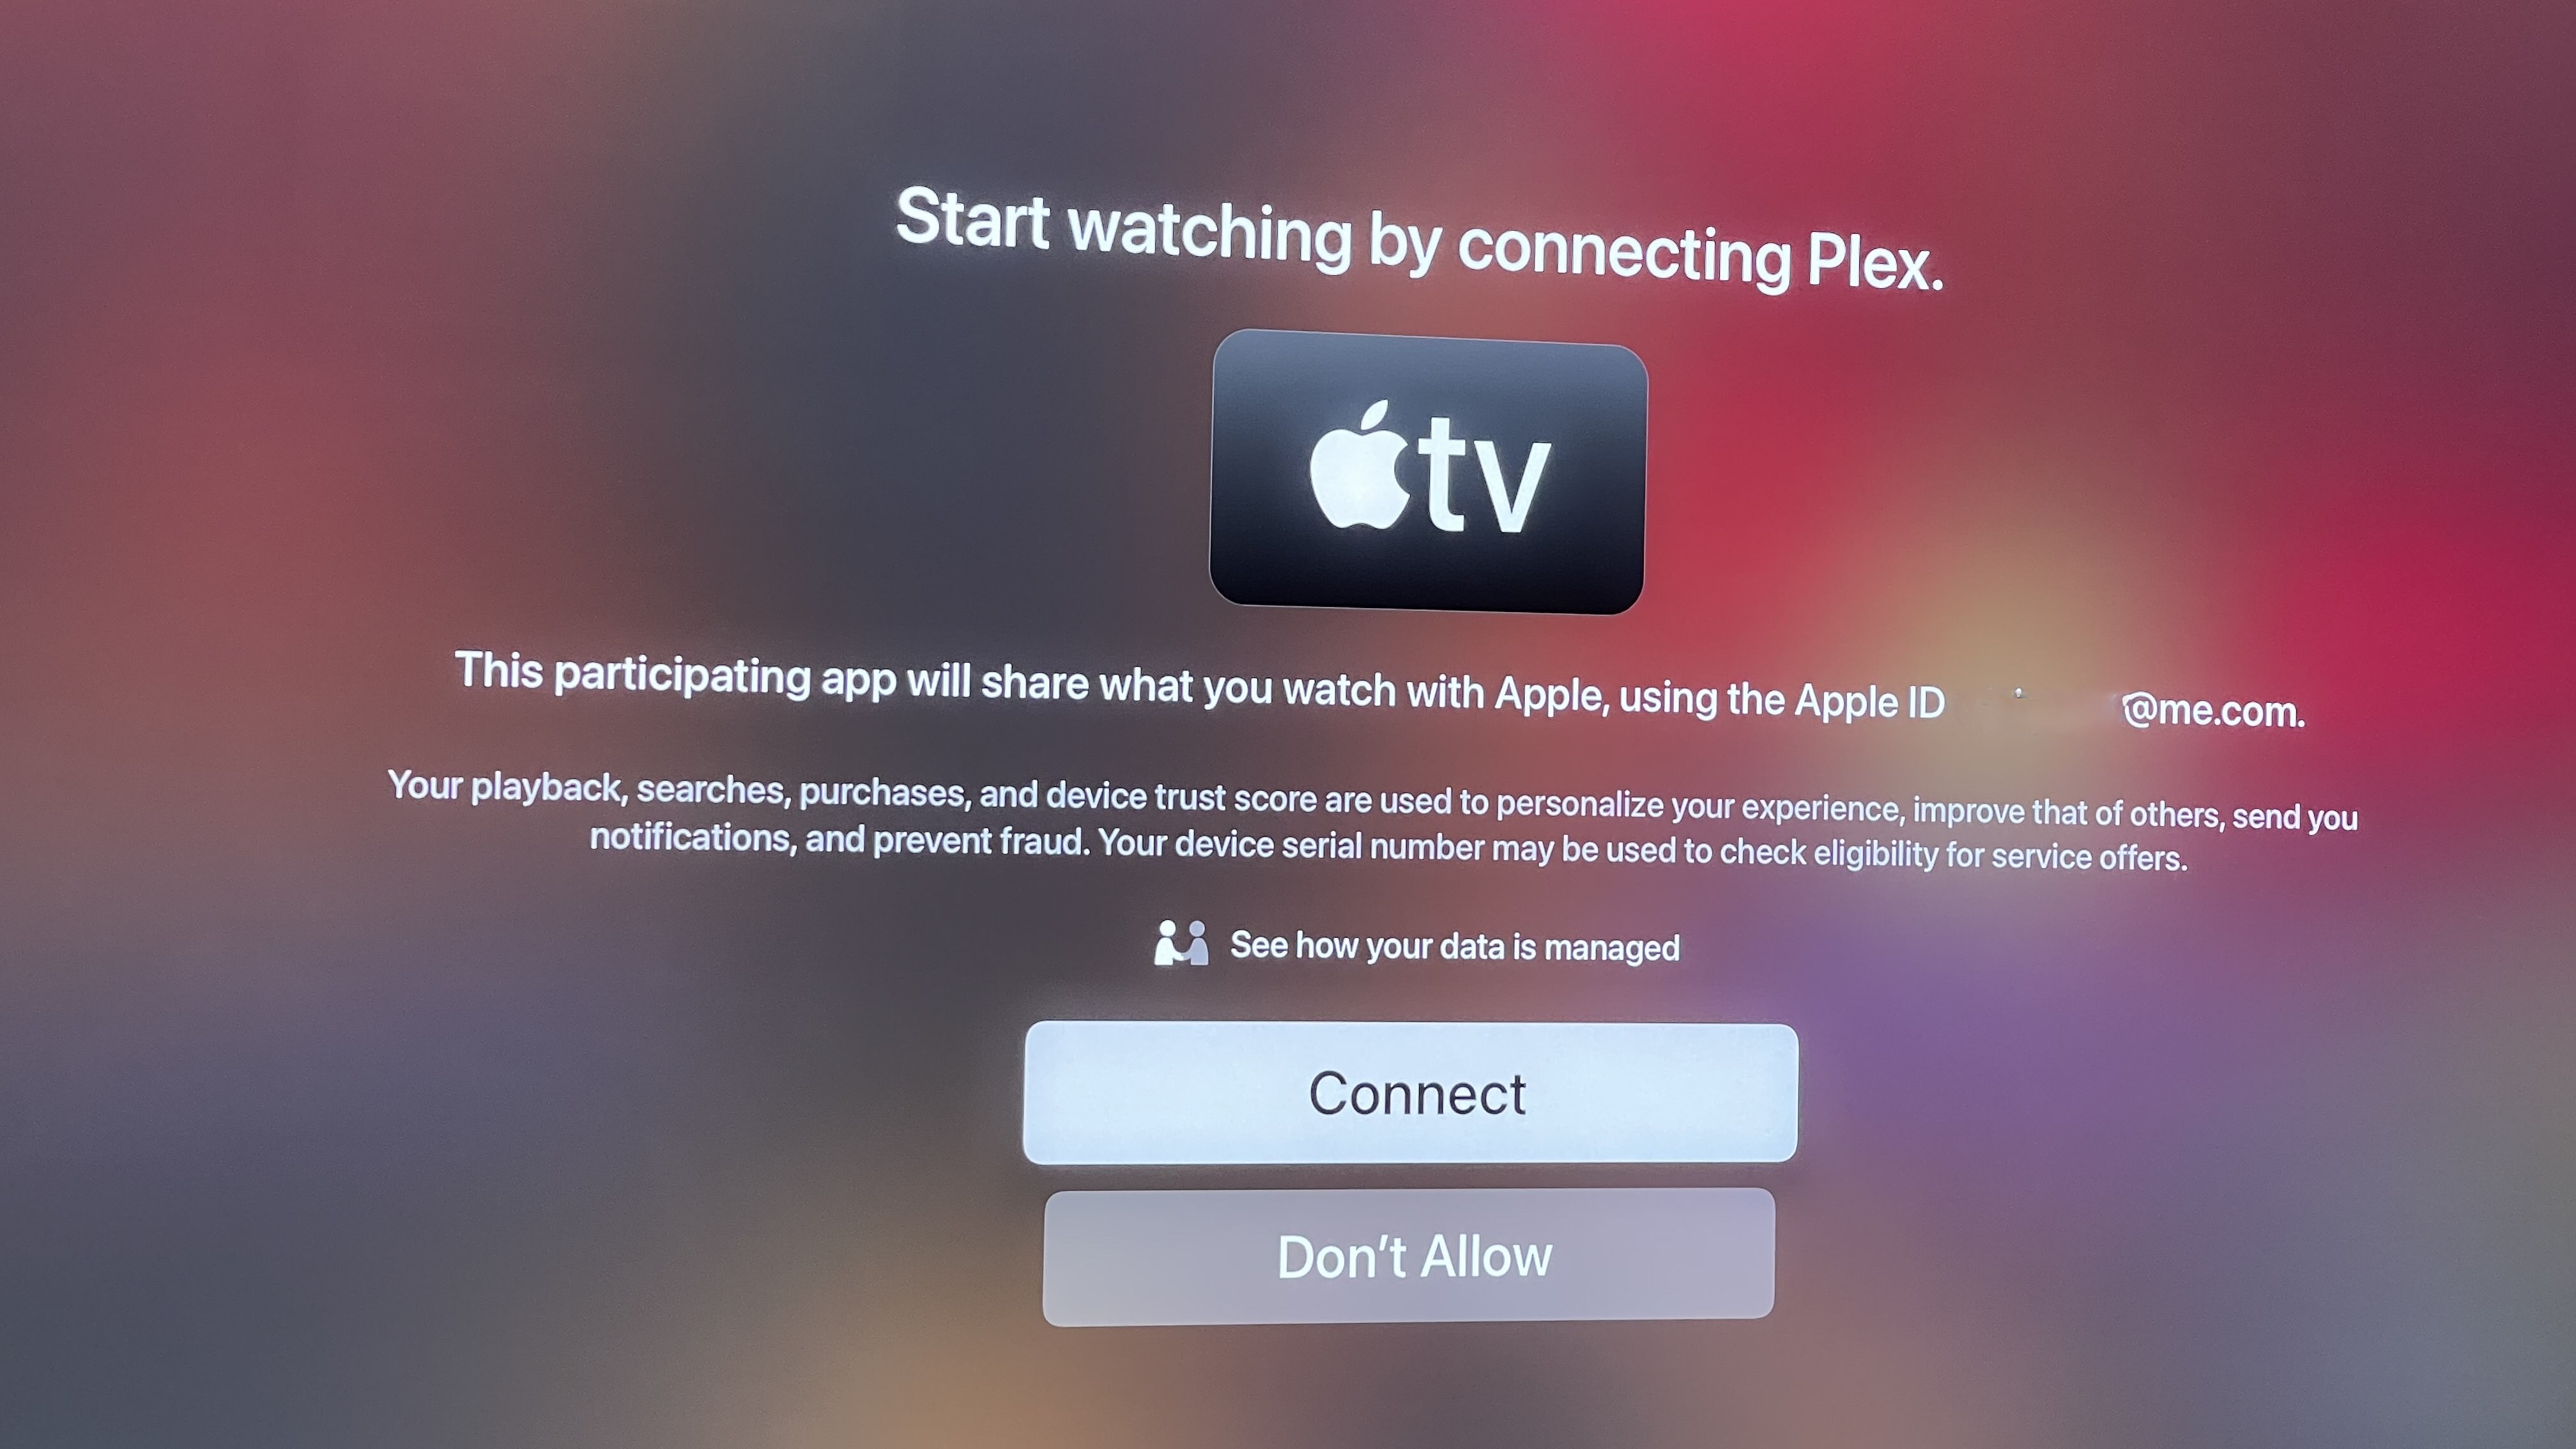 plex media player will not play videos